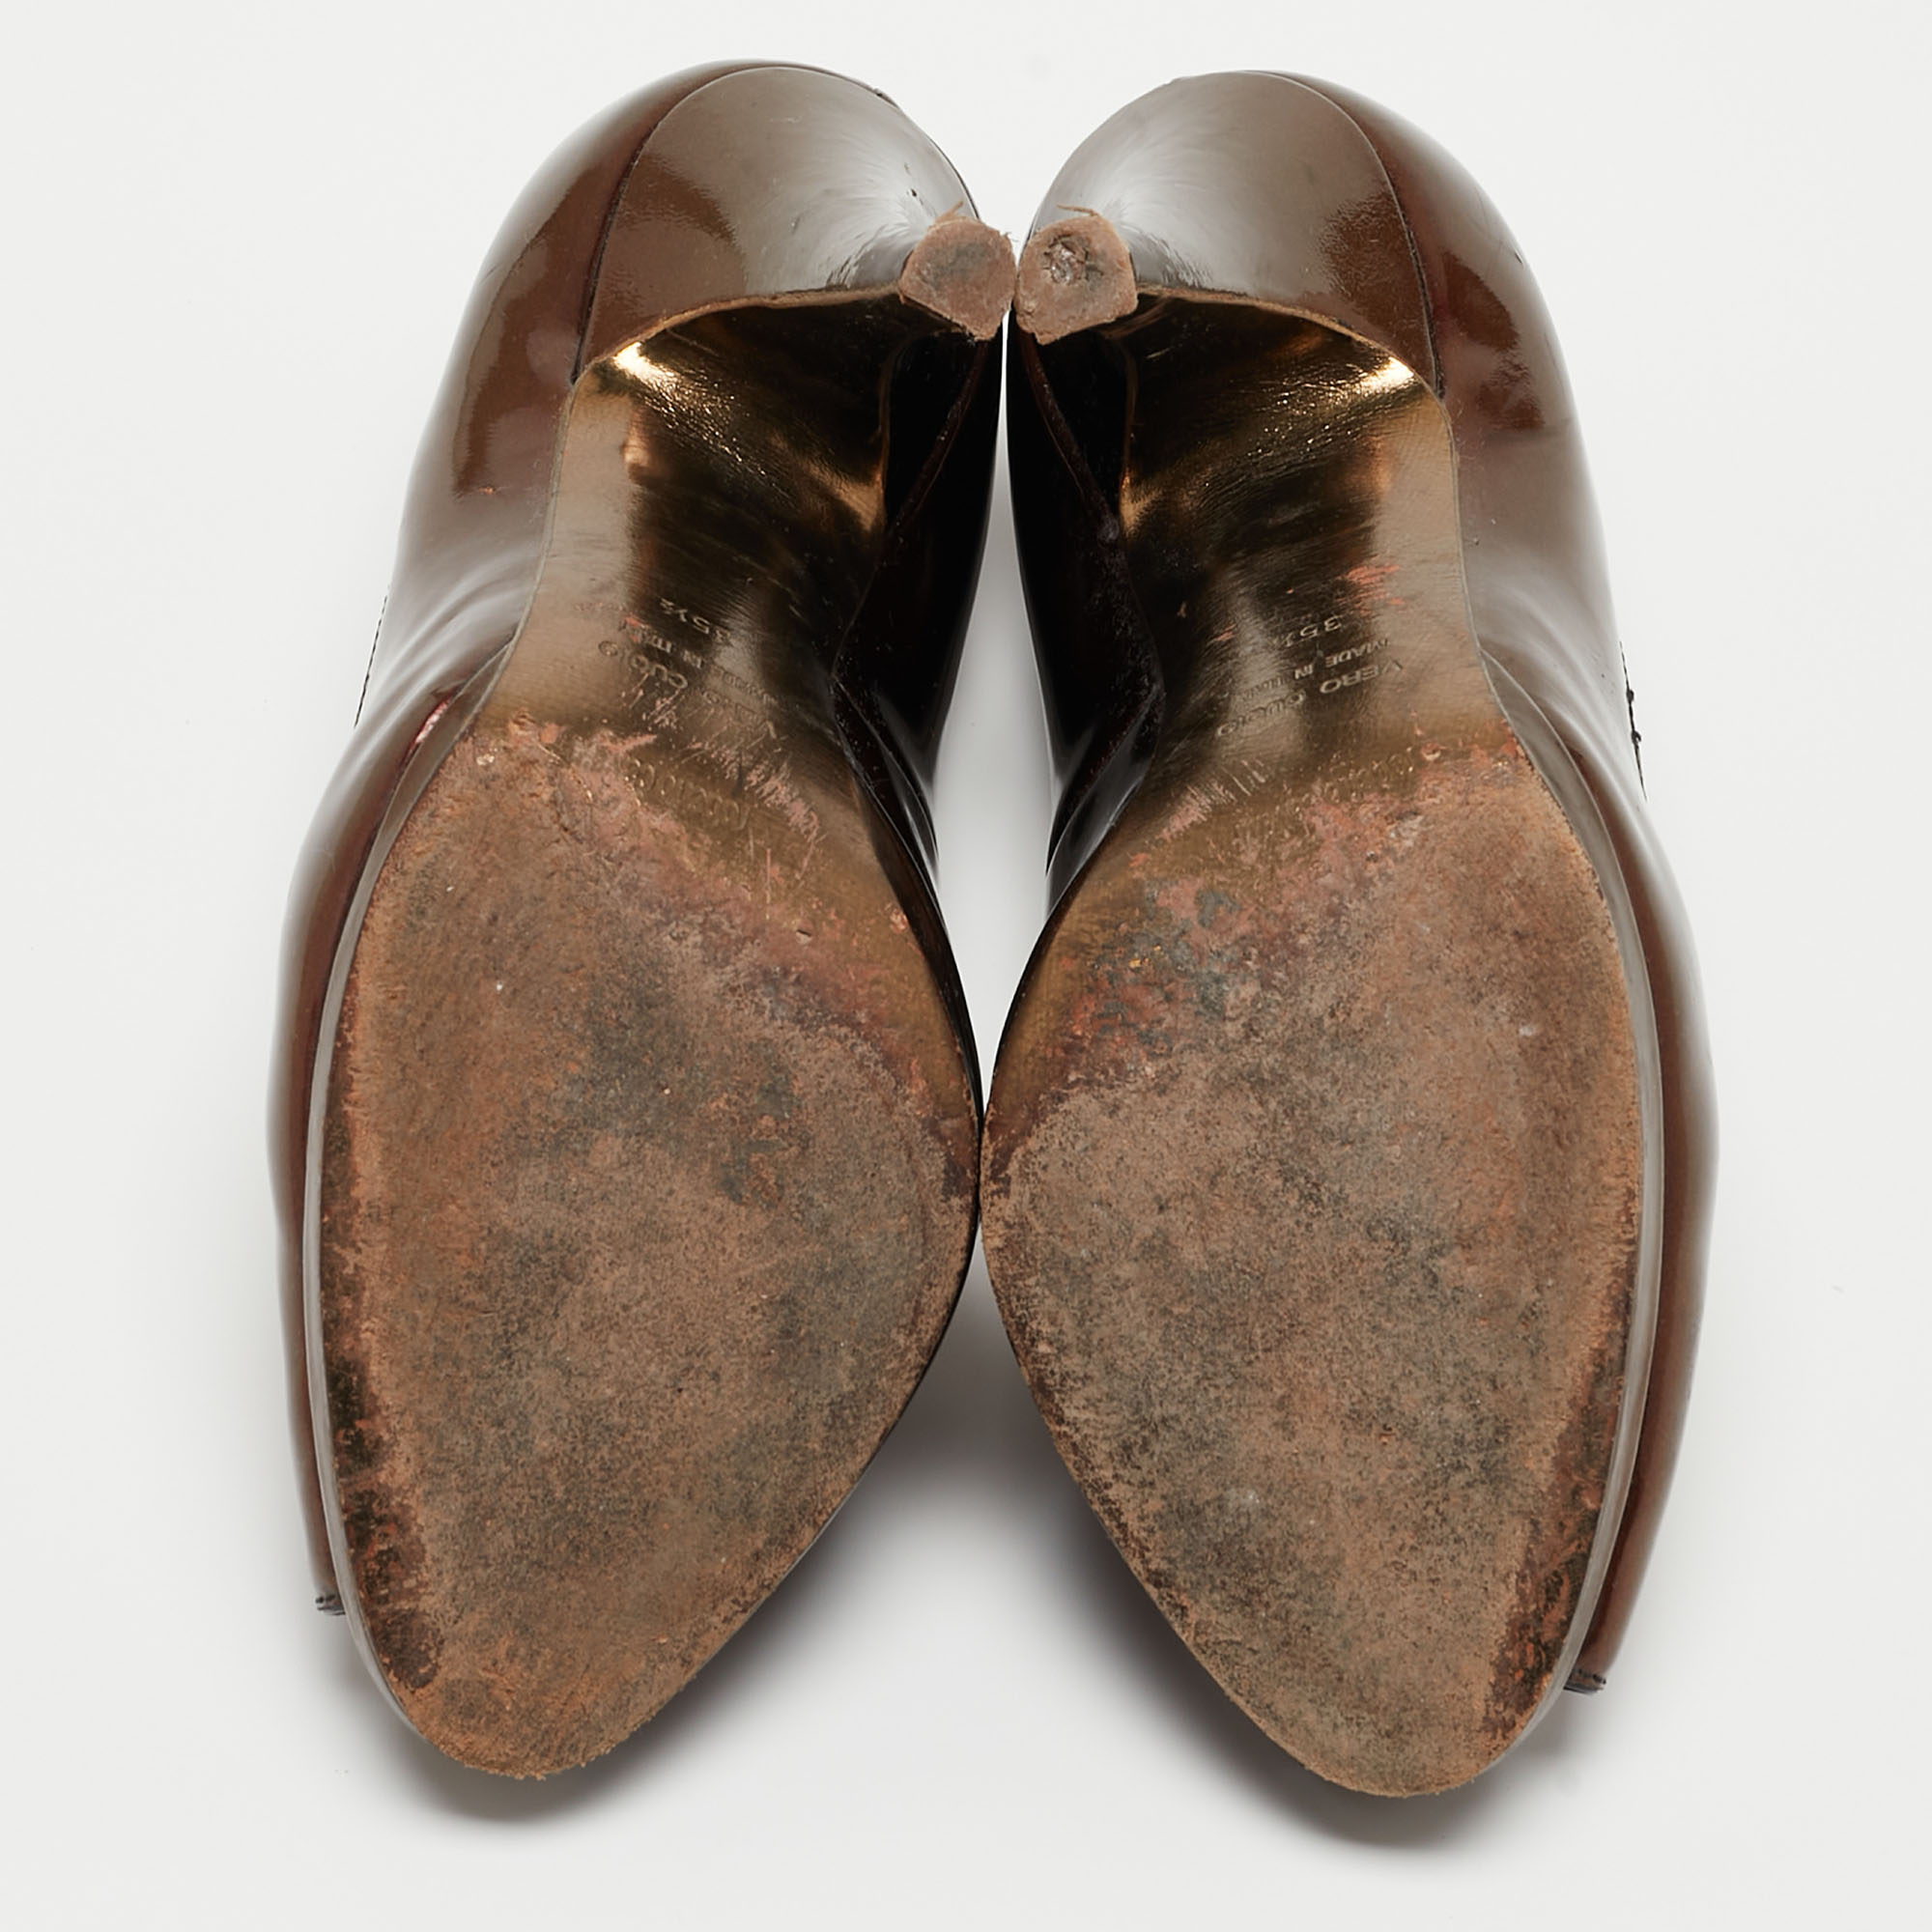 Roberto Cavalli Metallic Gold Patent Leather Peep Toe Pumps Size 35.5